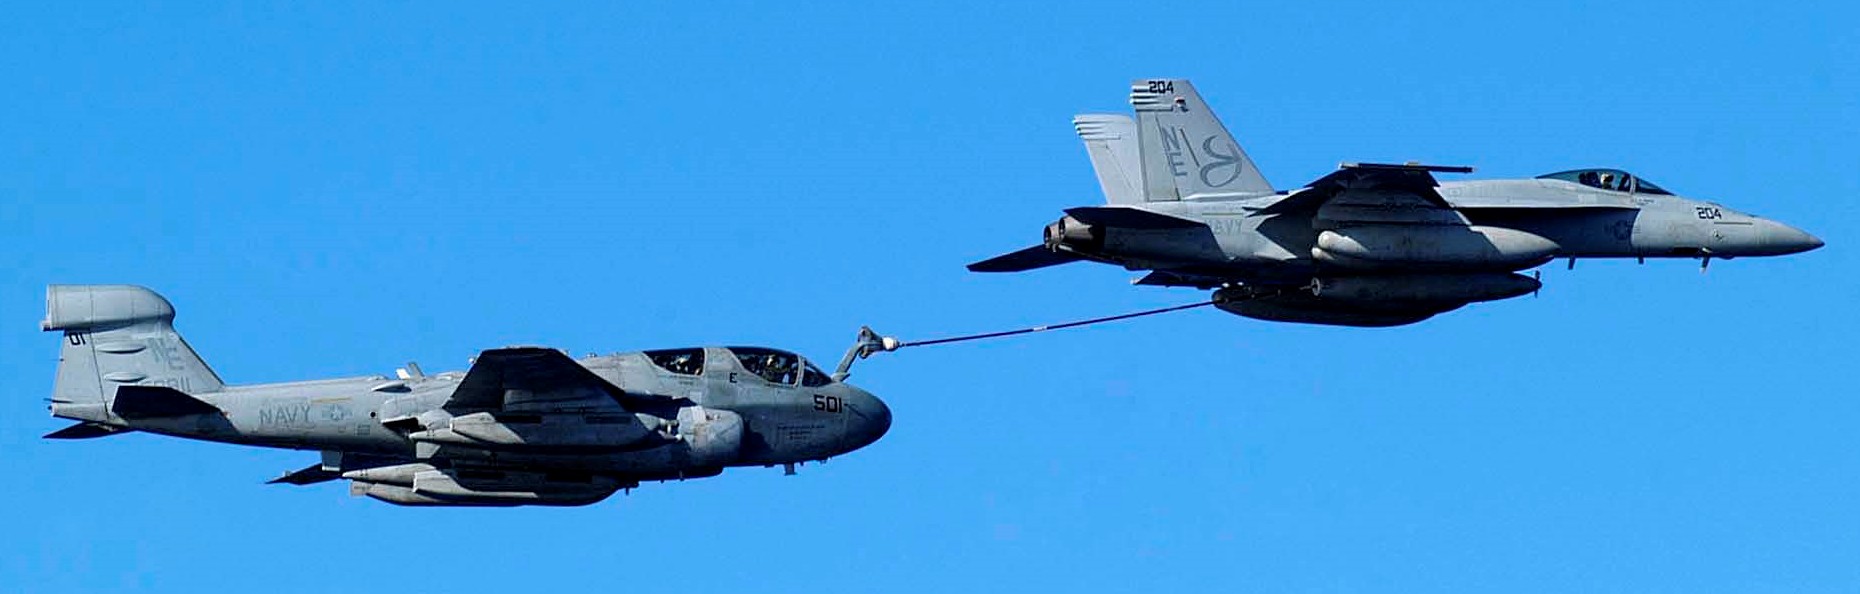 vfa-137 kestrels strike fighter squadron f/a-18e super hornet cvw-2 refueling ea-6b prowler vaq-131 2005 62